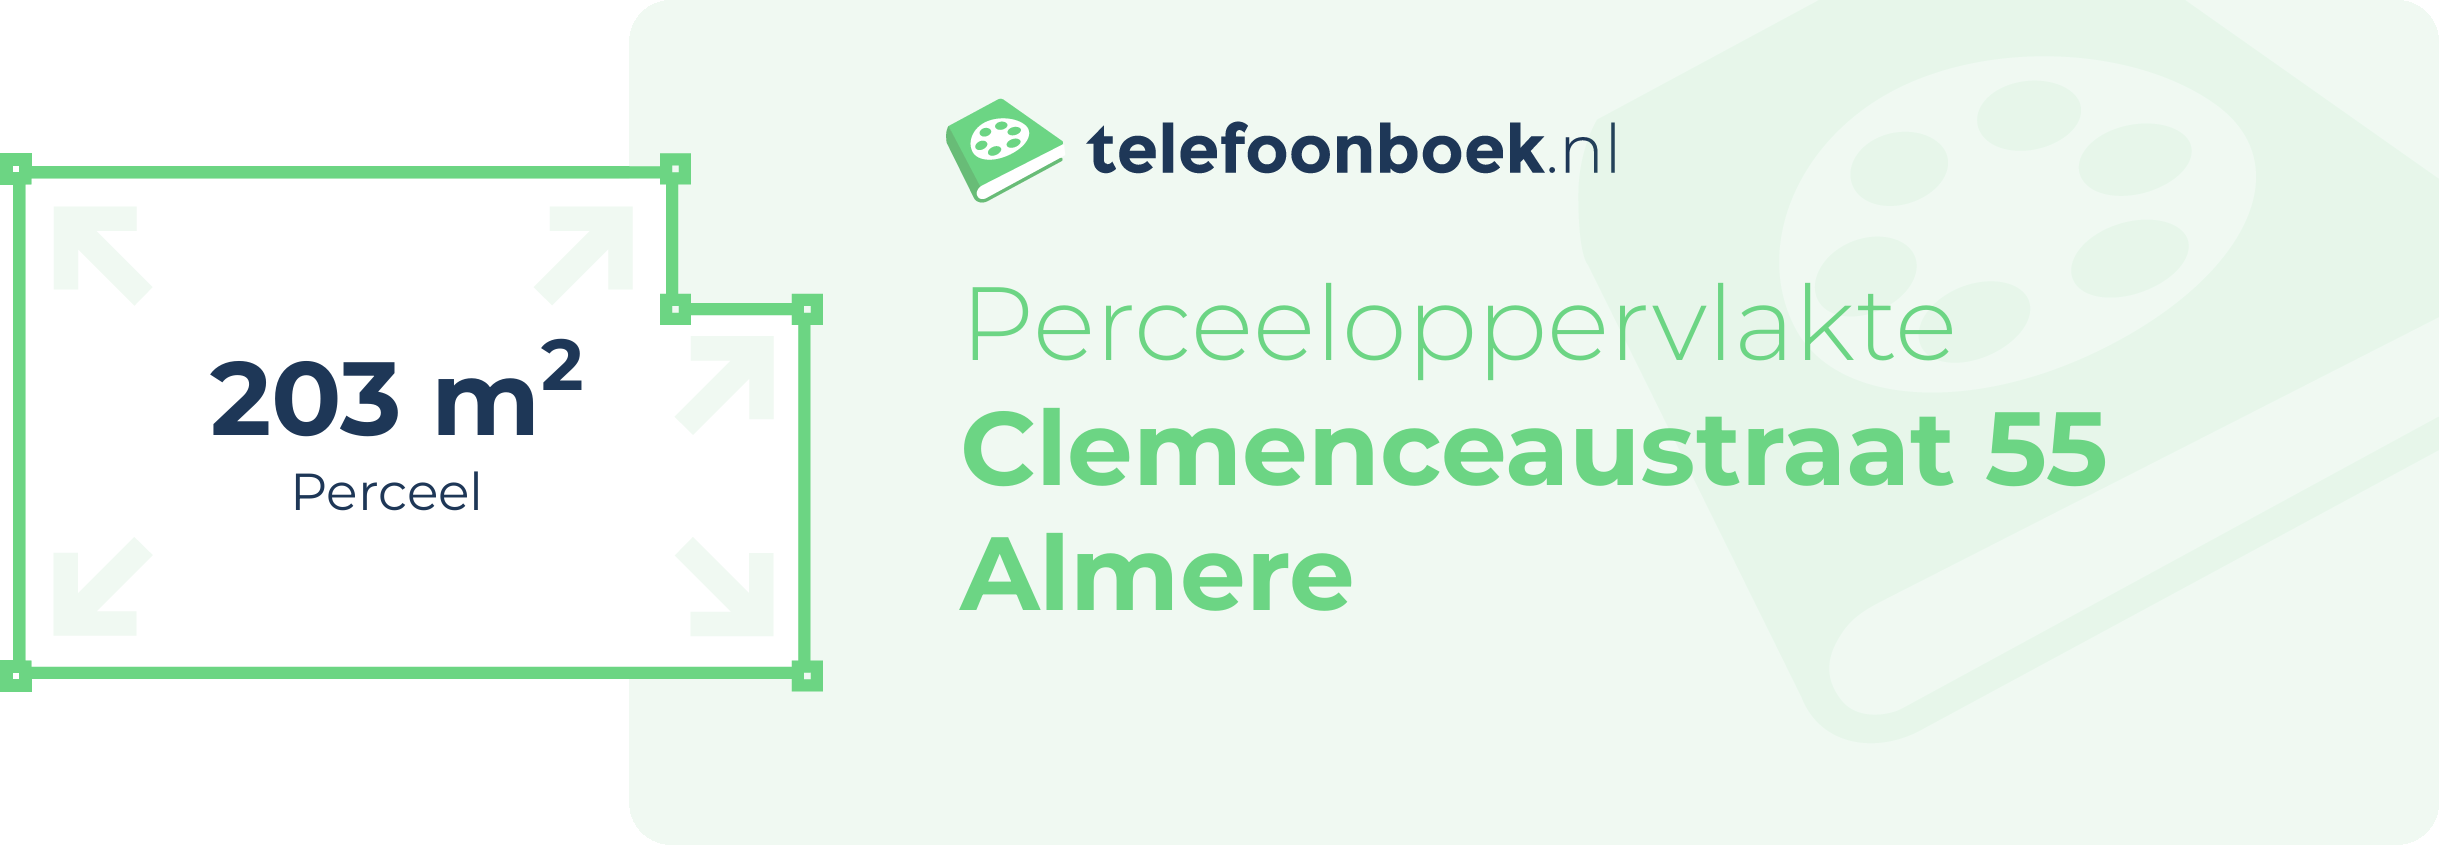 Perceeloppervlakte Clemenceaustraat 55 Almere